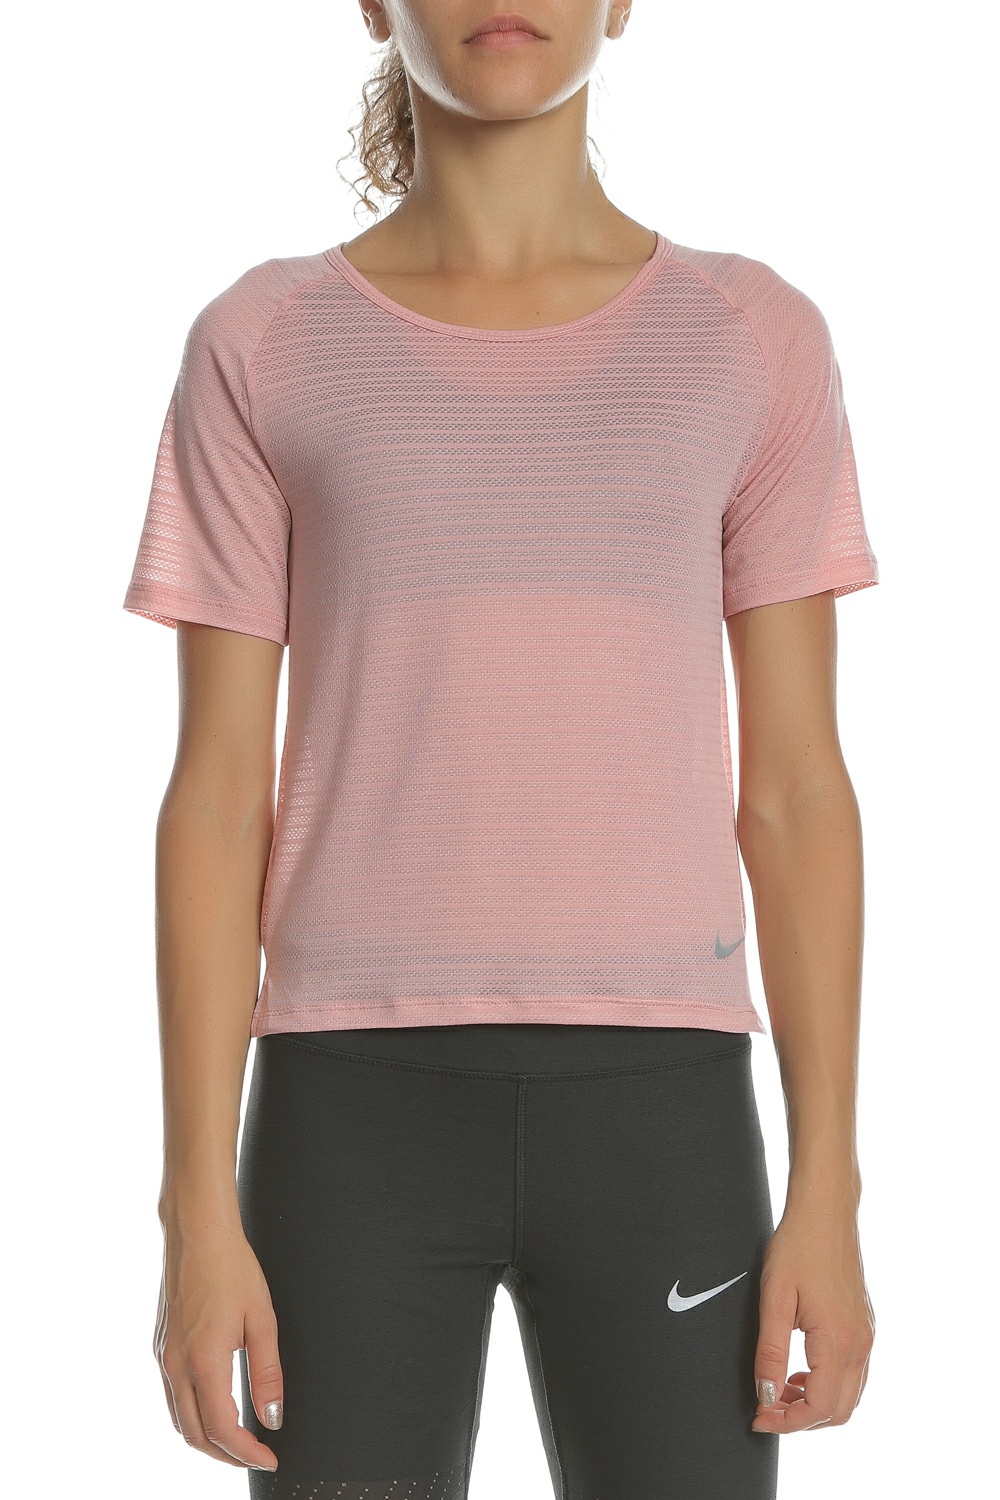 NIKE - Γυναικεία κοντομάνικη μπλούζα NIKE Dry Miler Breathe ροζ Γυναικεία/Ρούχα/Αθλητικά/T-shirt-Τοπ